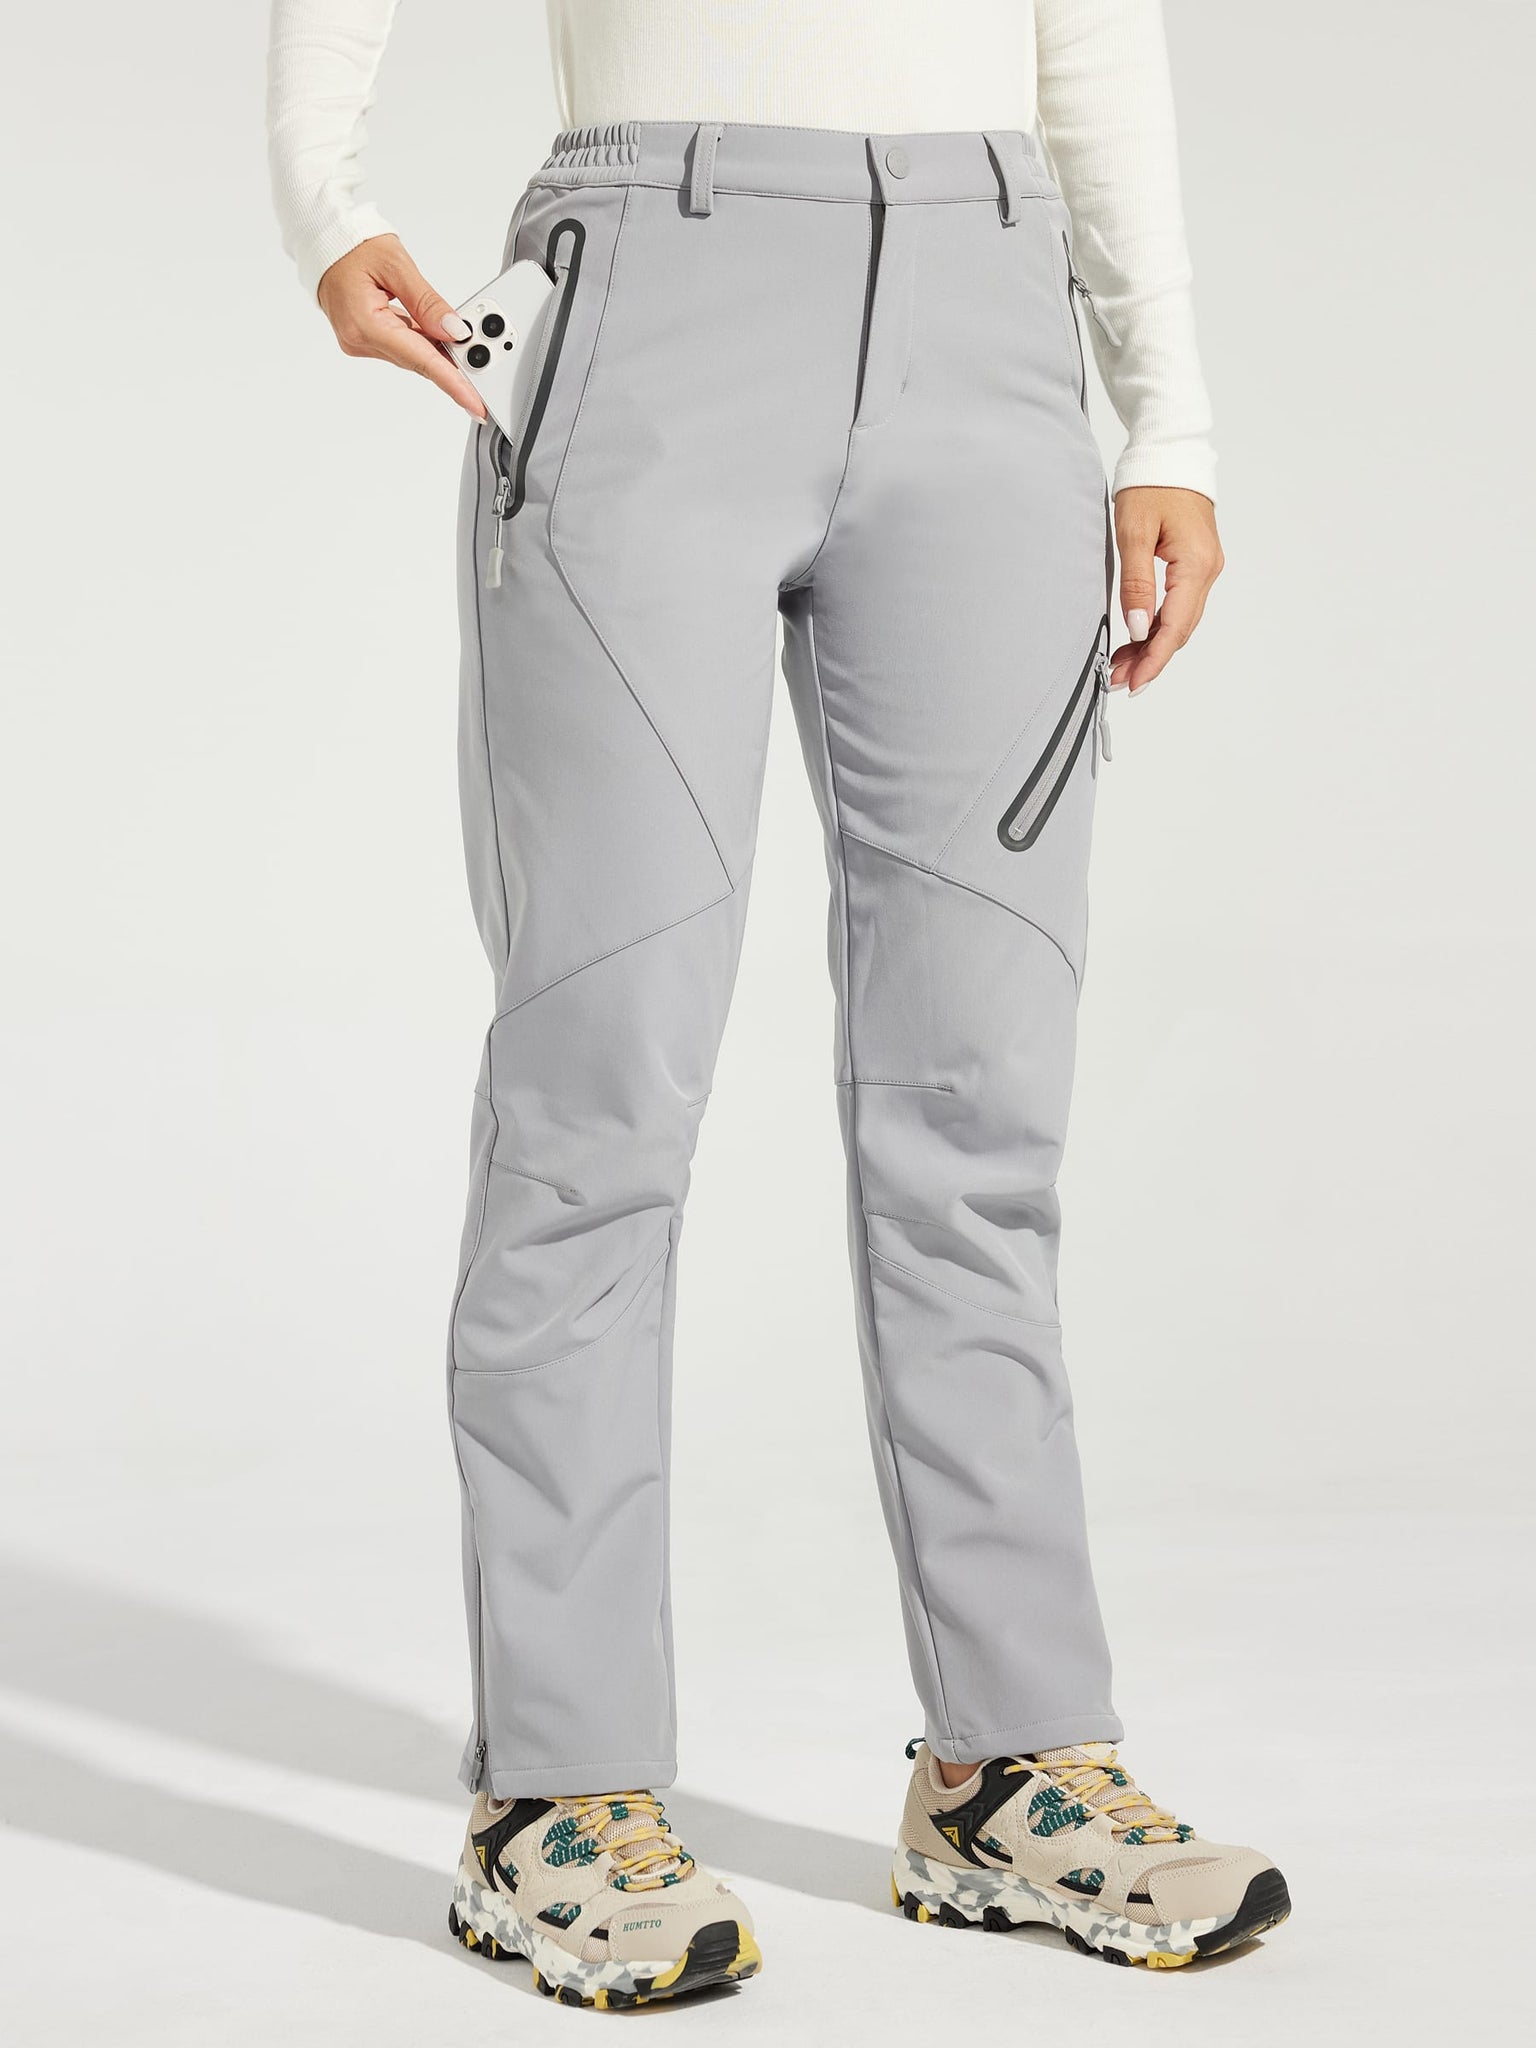 Women's Fleece Lined Snow Cargo Pants_Gray_model1